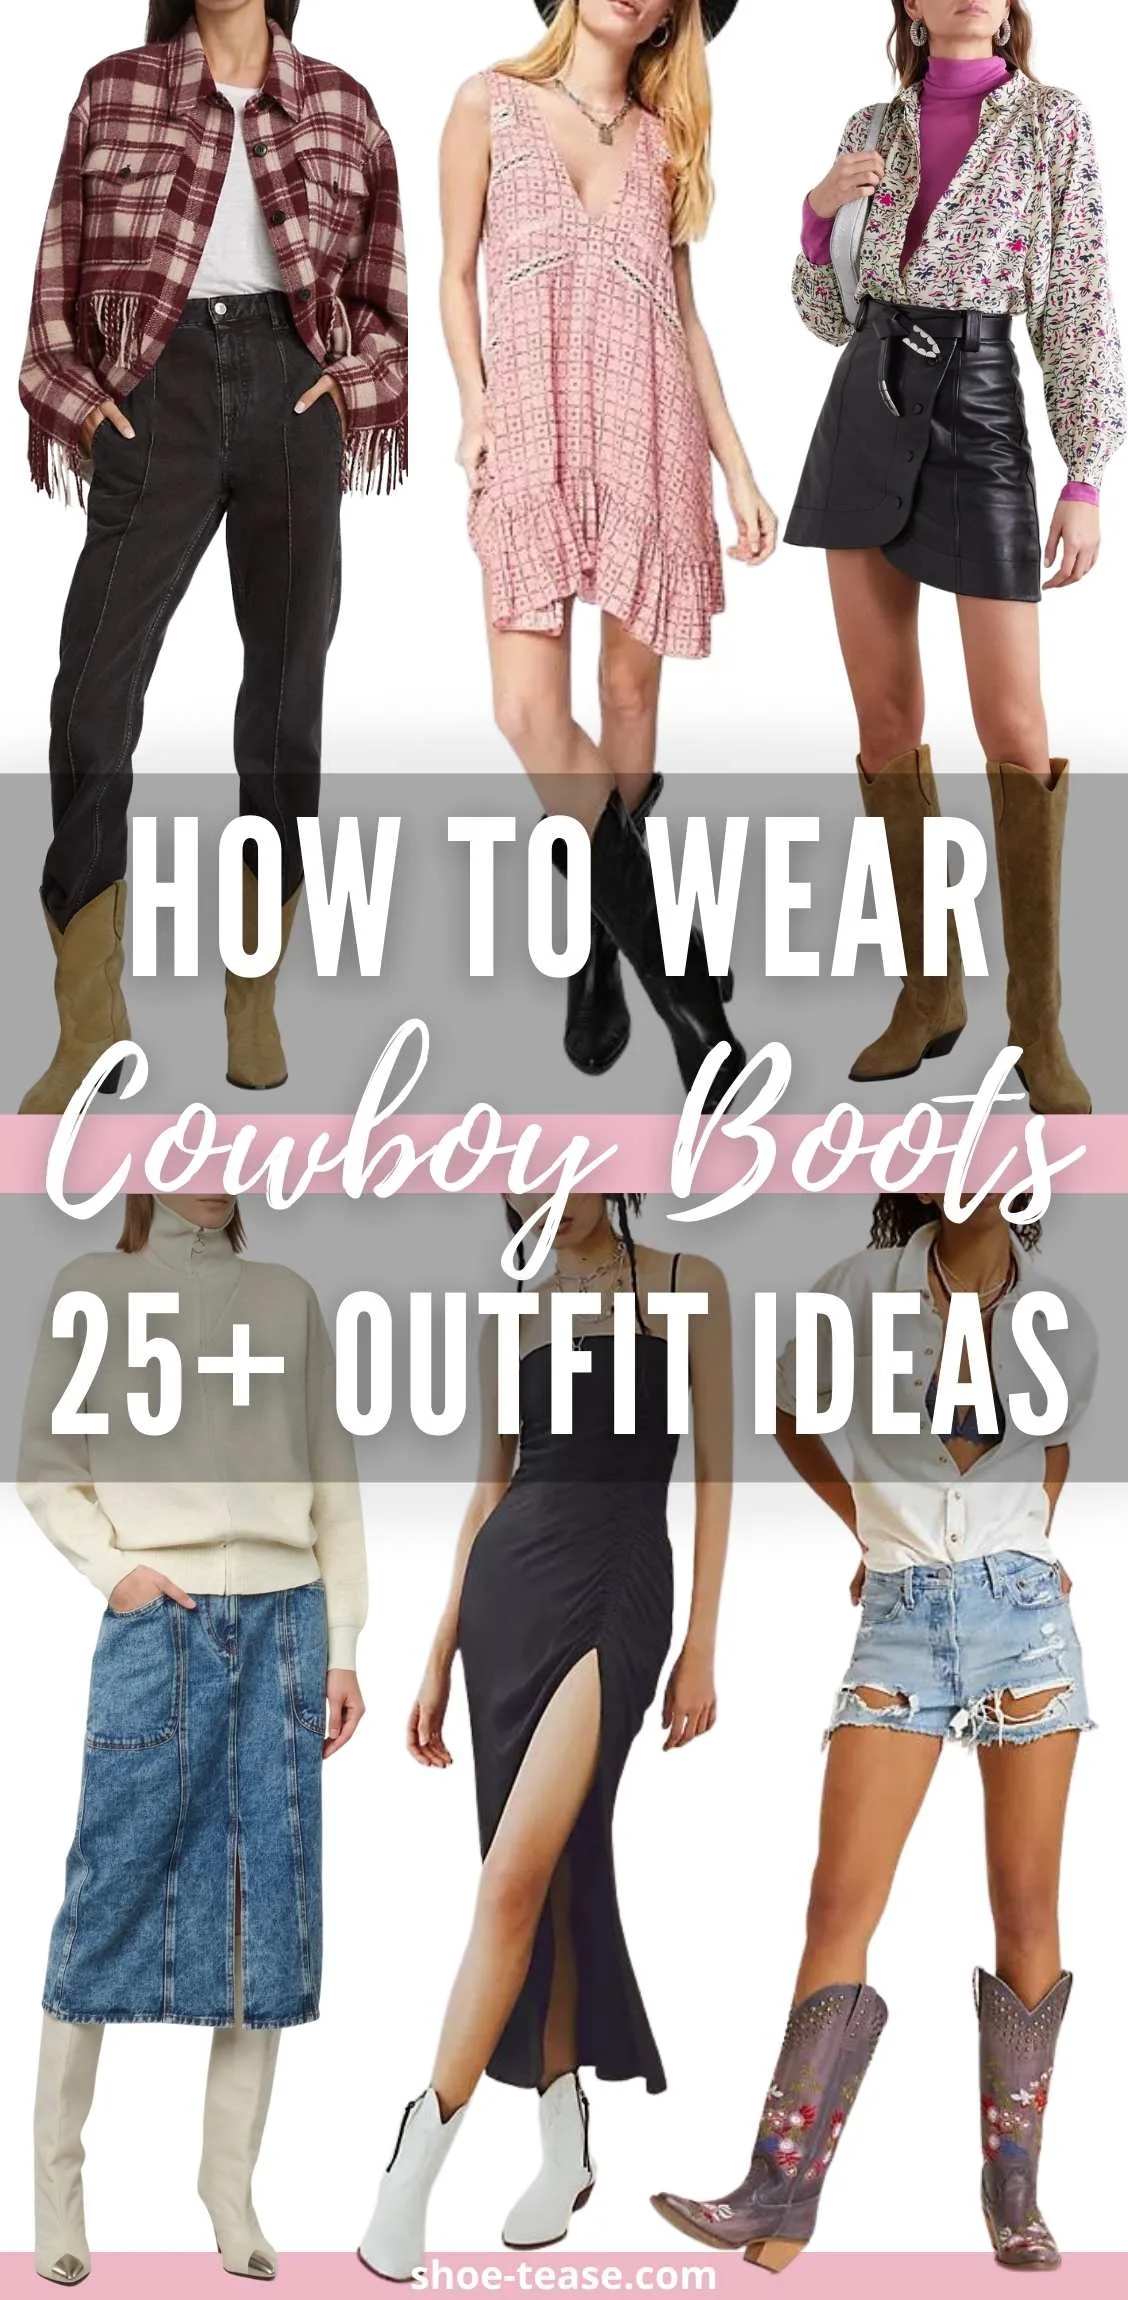 Handy Tips: How Should Cowboy Boots Fit?